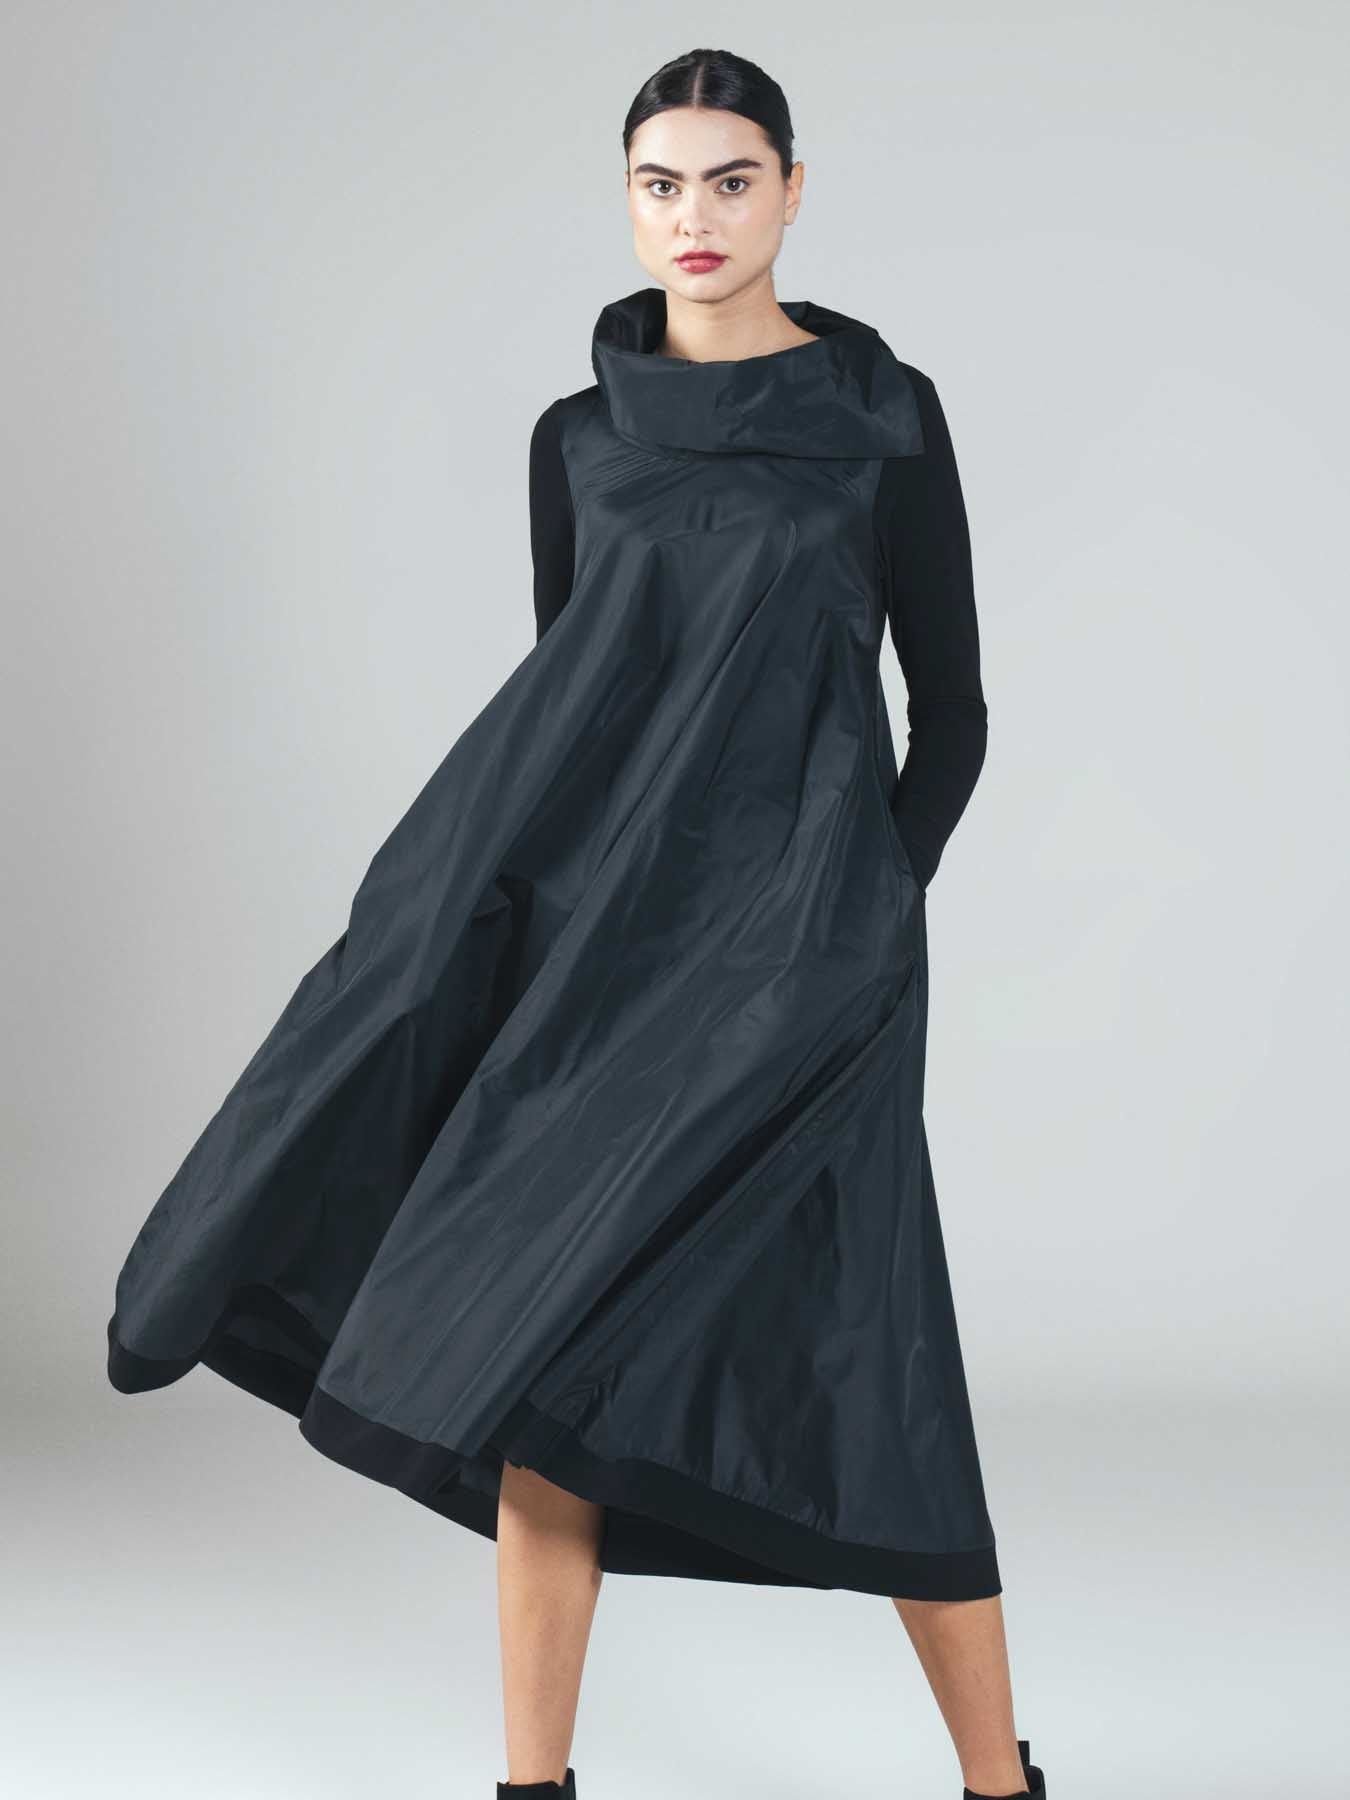 Igor Dobranic Norway Dress, Black - Statement Boutique